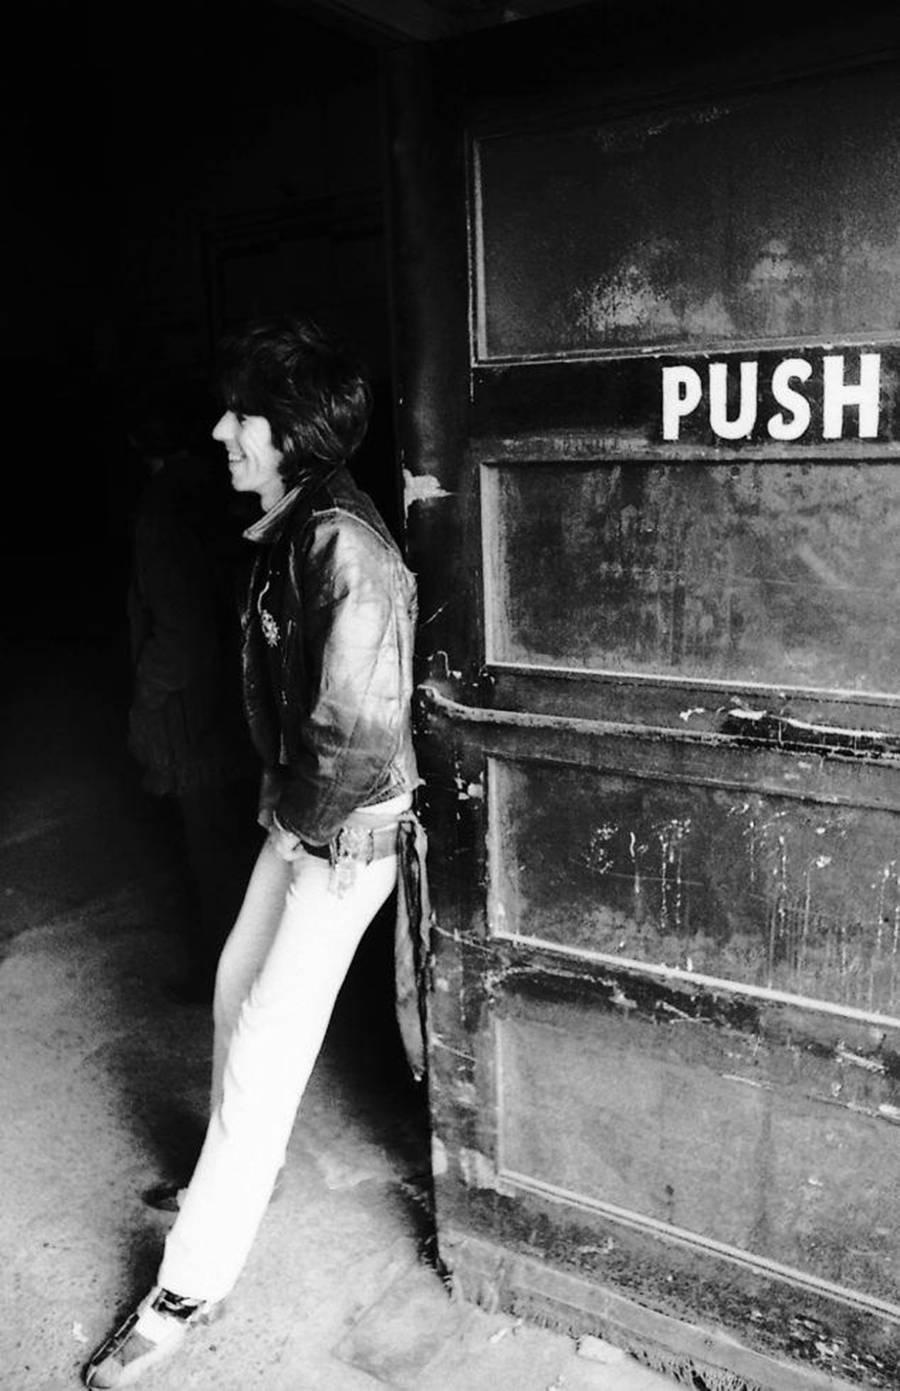 Michael Cooper (b.1941) Black and White Photograph - Keith Richards, "Push"